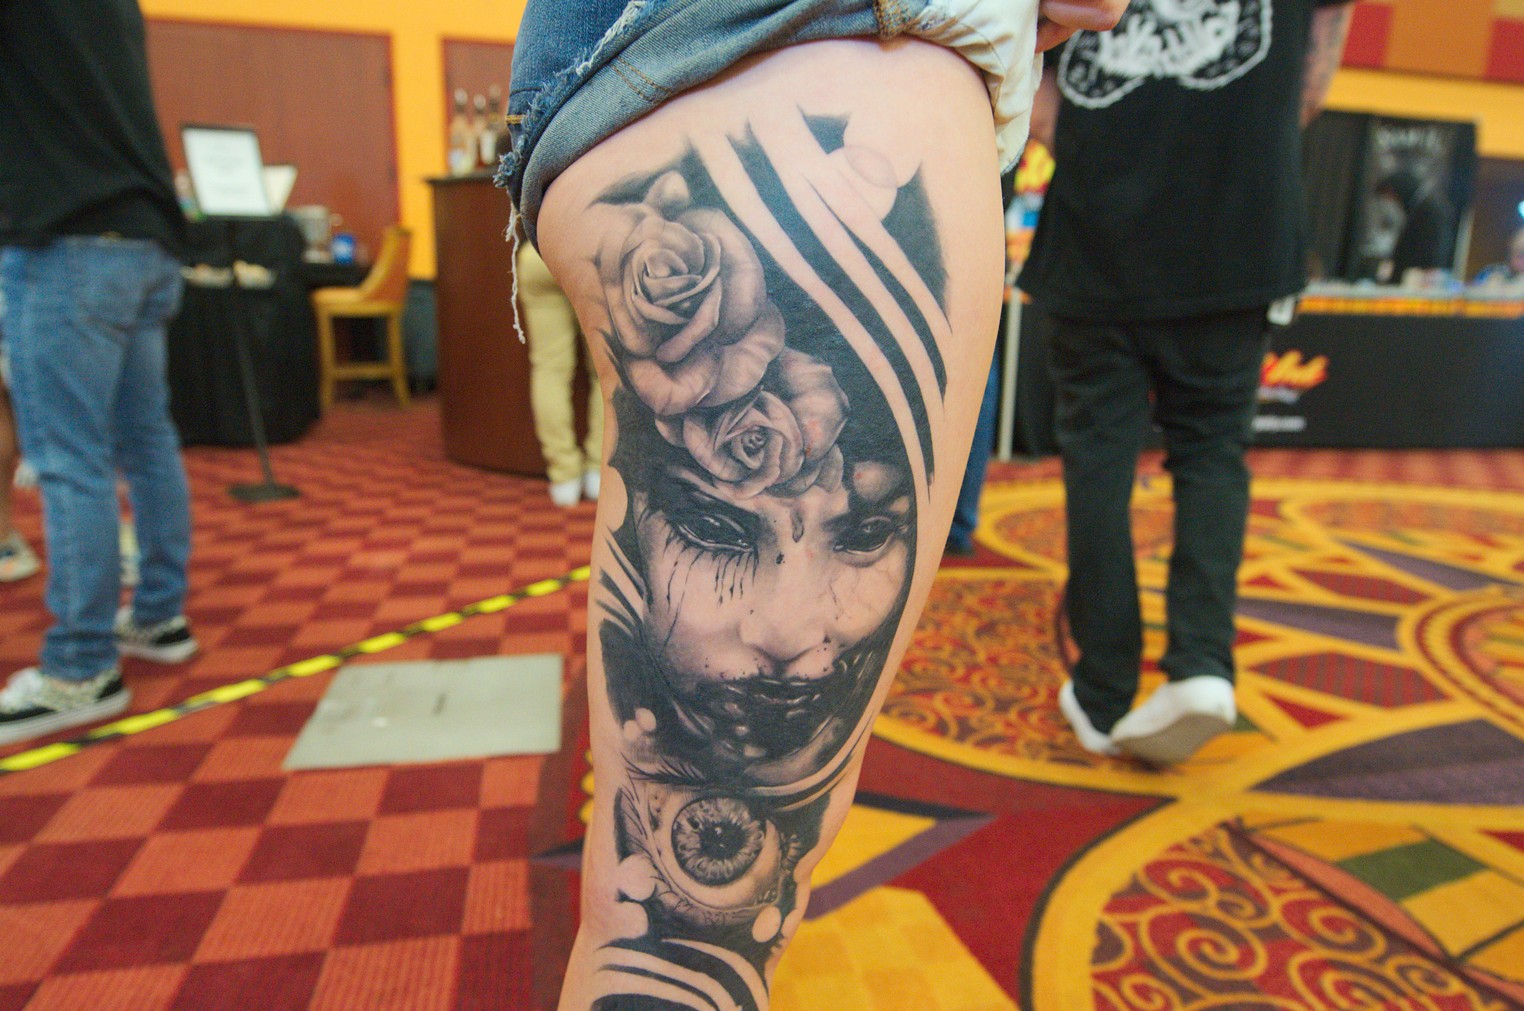 State of Arizona Flag Tattoo By Enoki Soju by enokisoju on DeviantArt